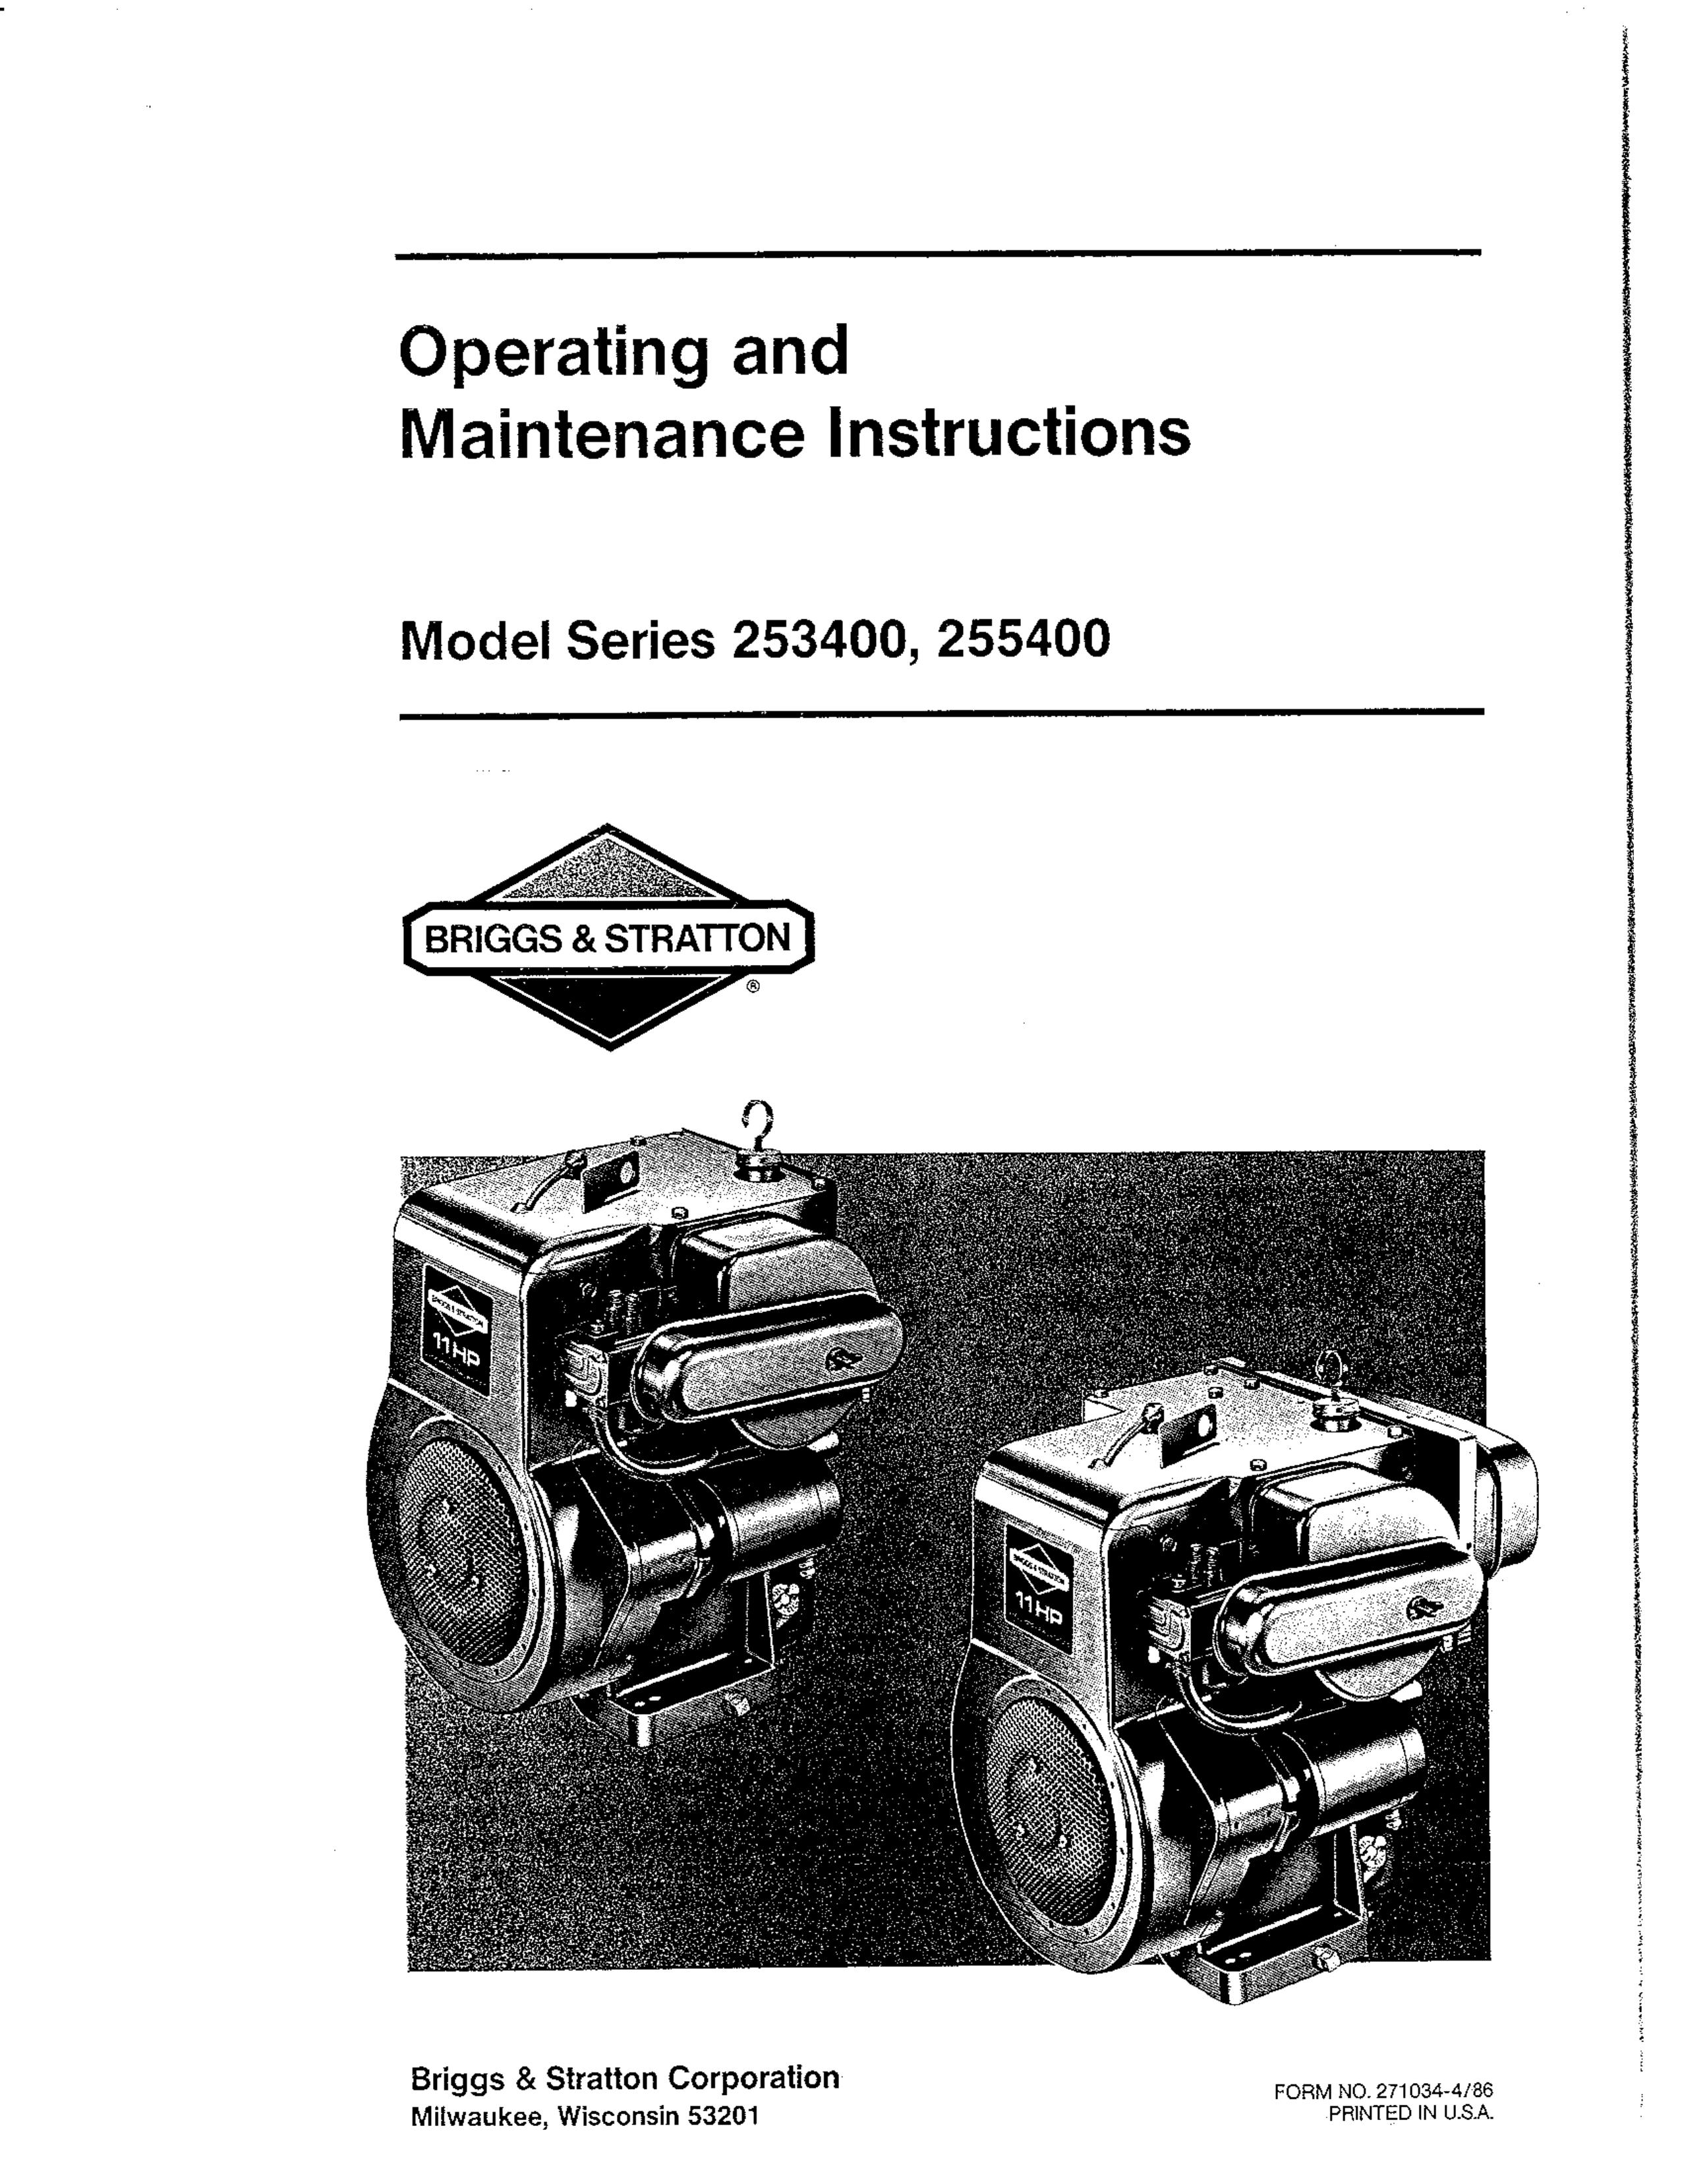 Briggs & Stratton 25540 Motorized Awning User Manual